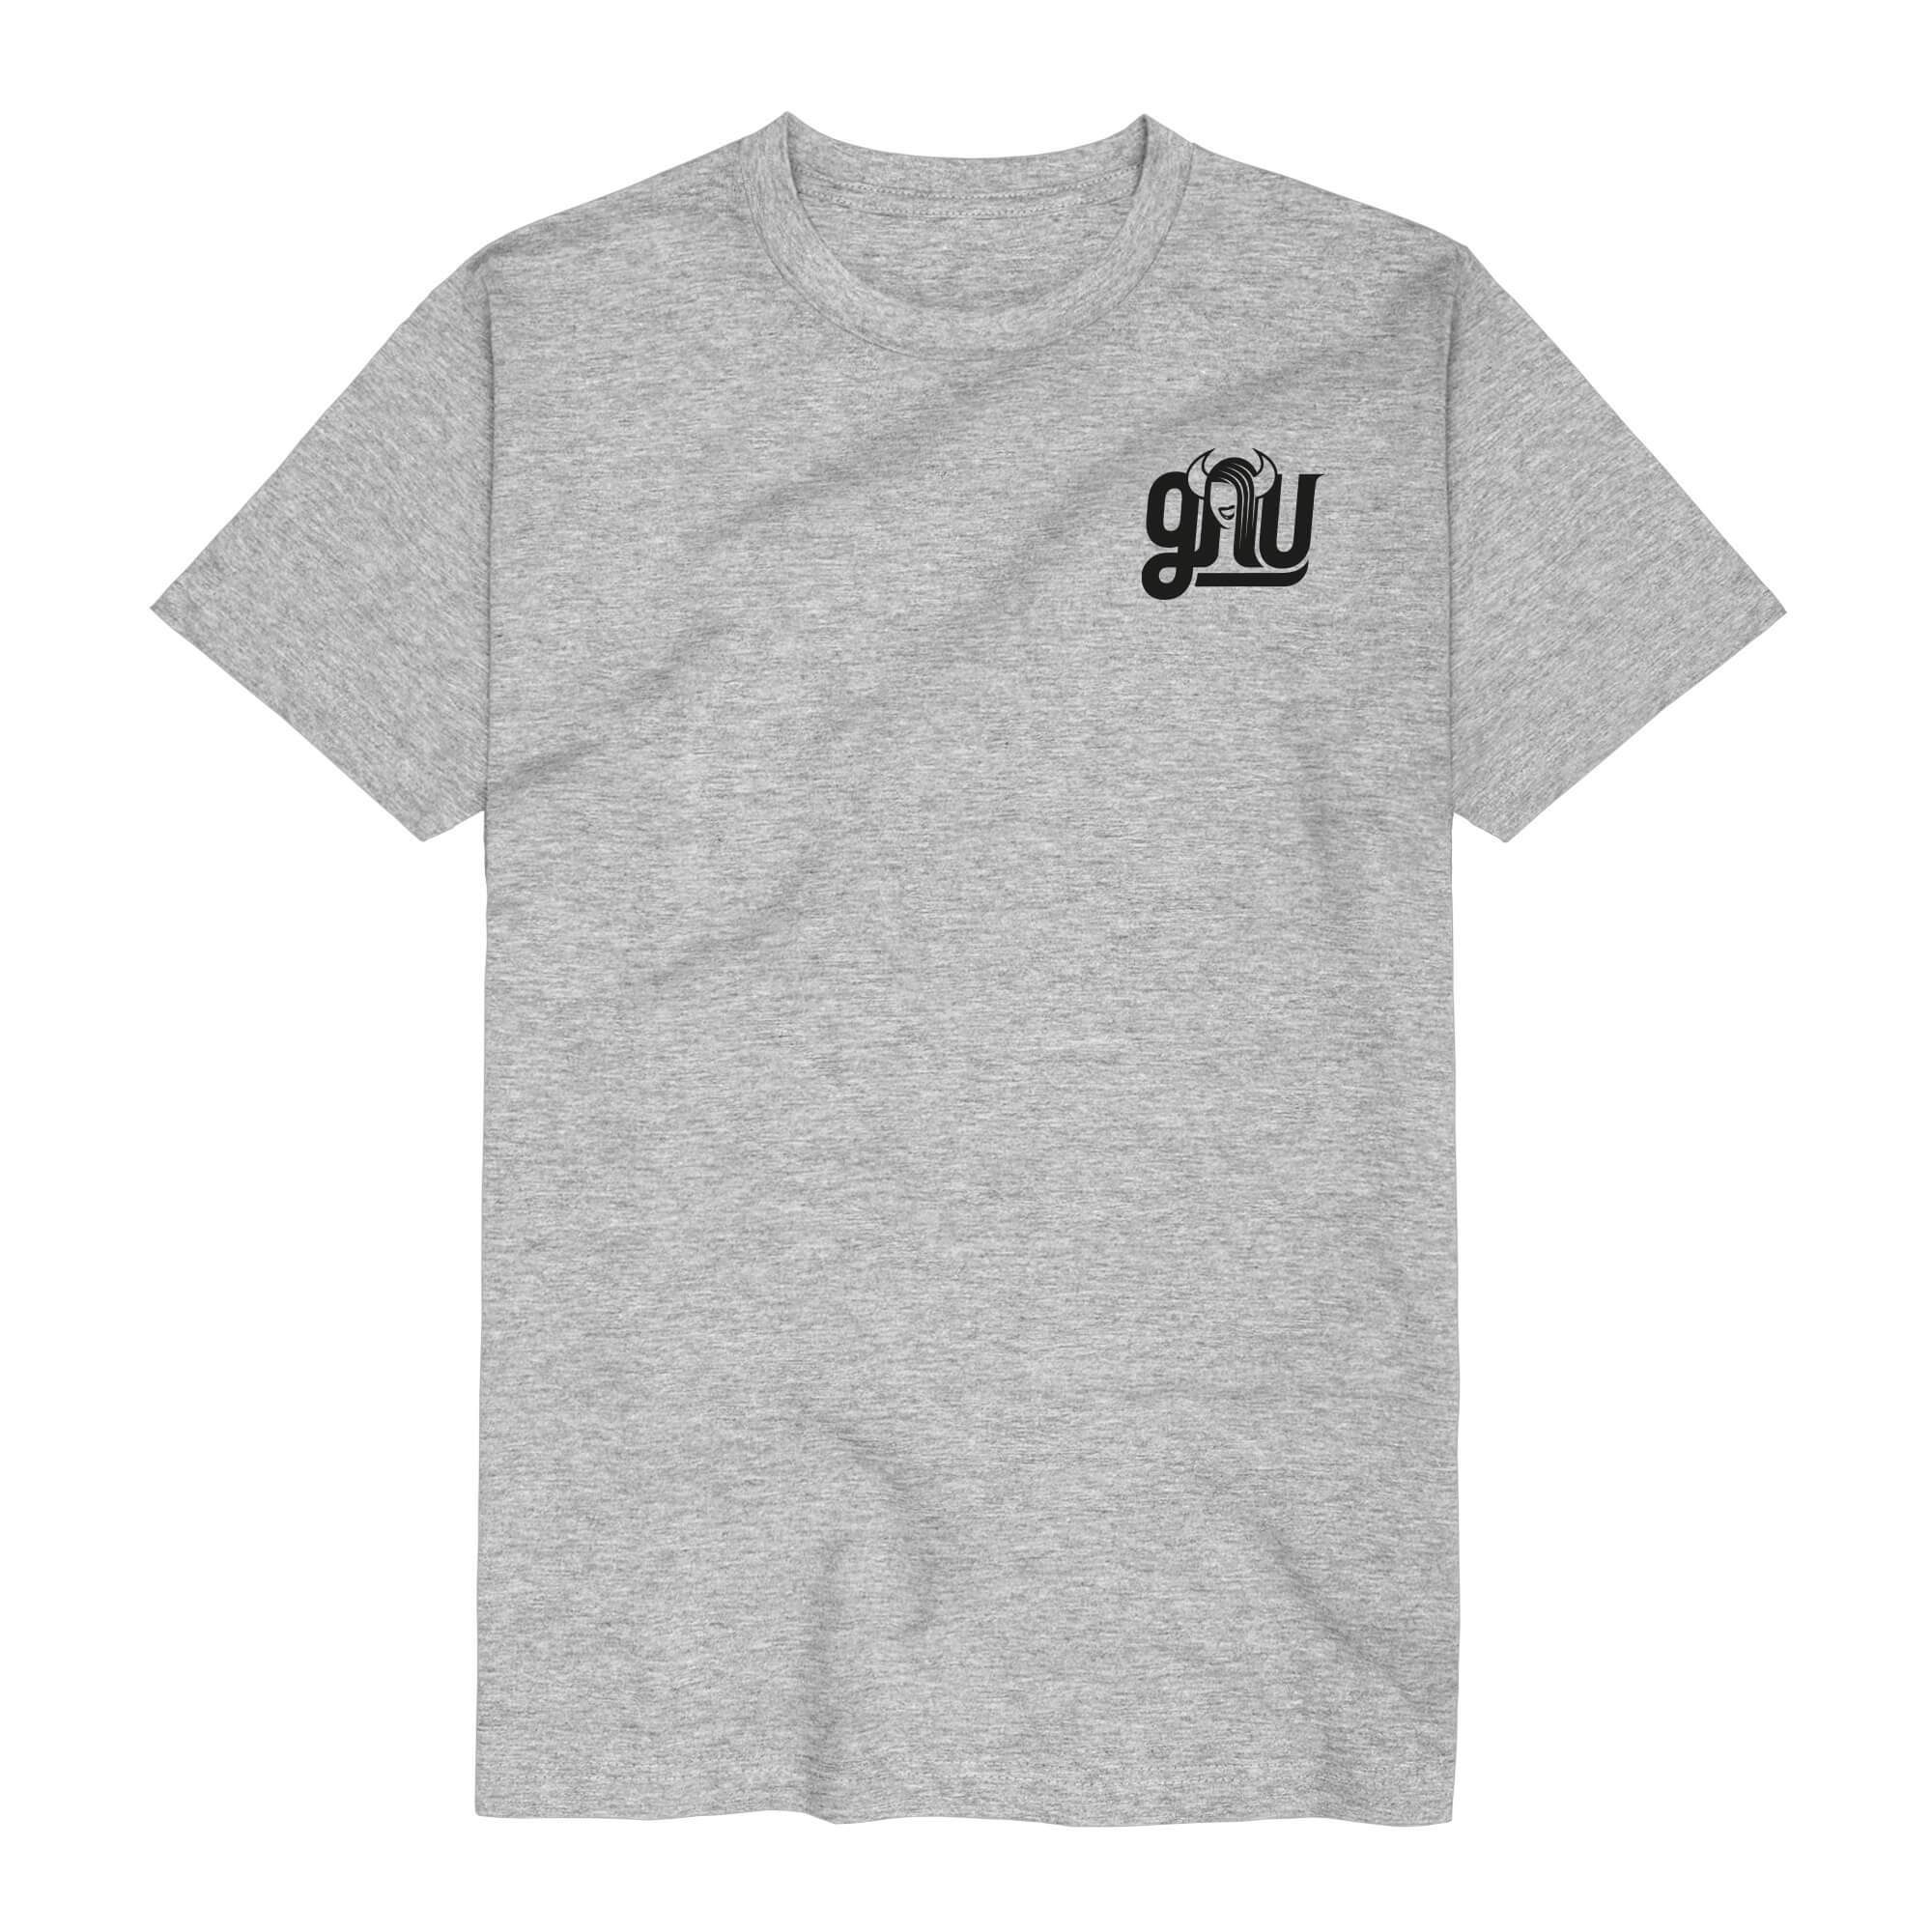 GNU Shop - Pocket Logo - GNU - T-Shirt